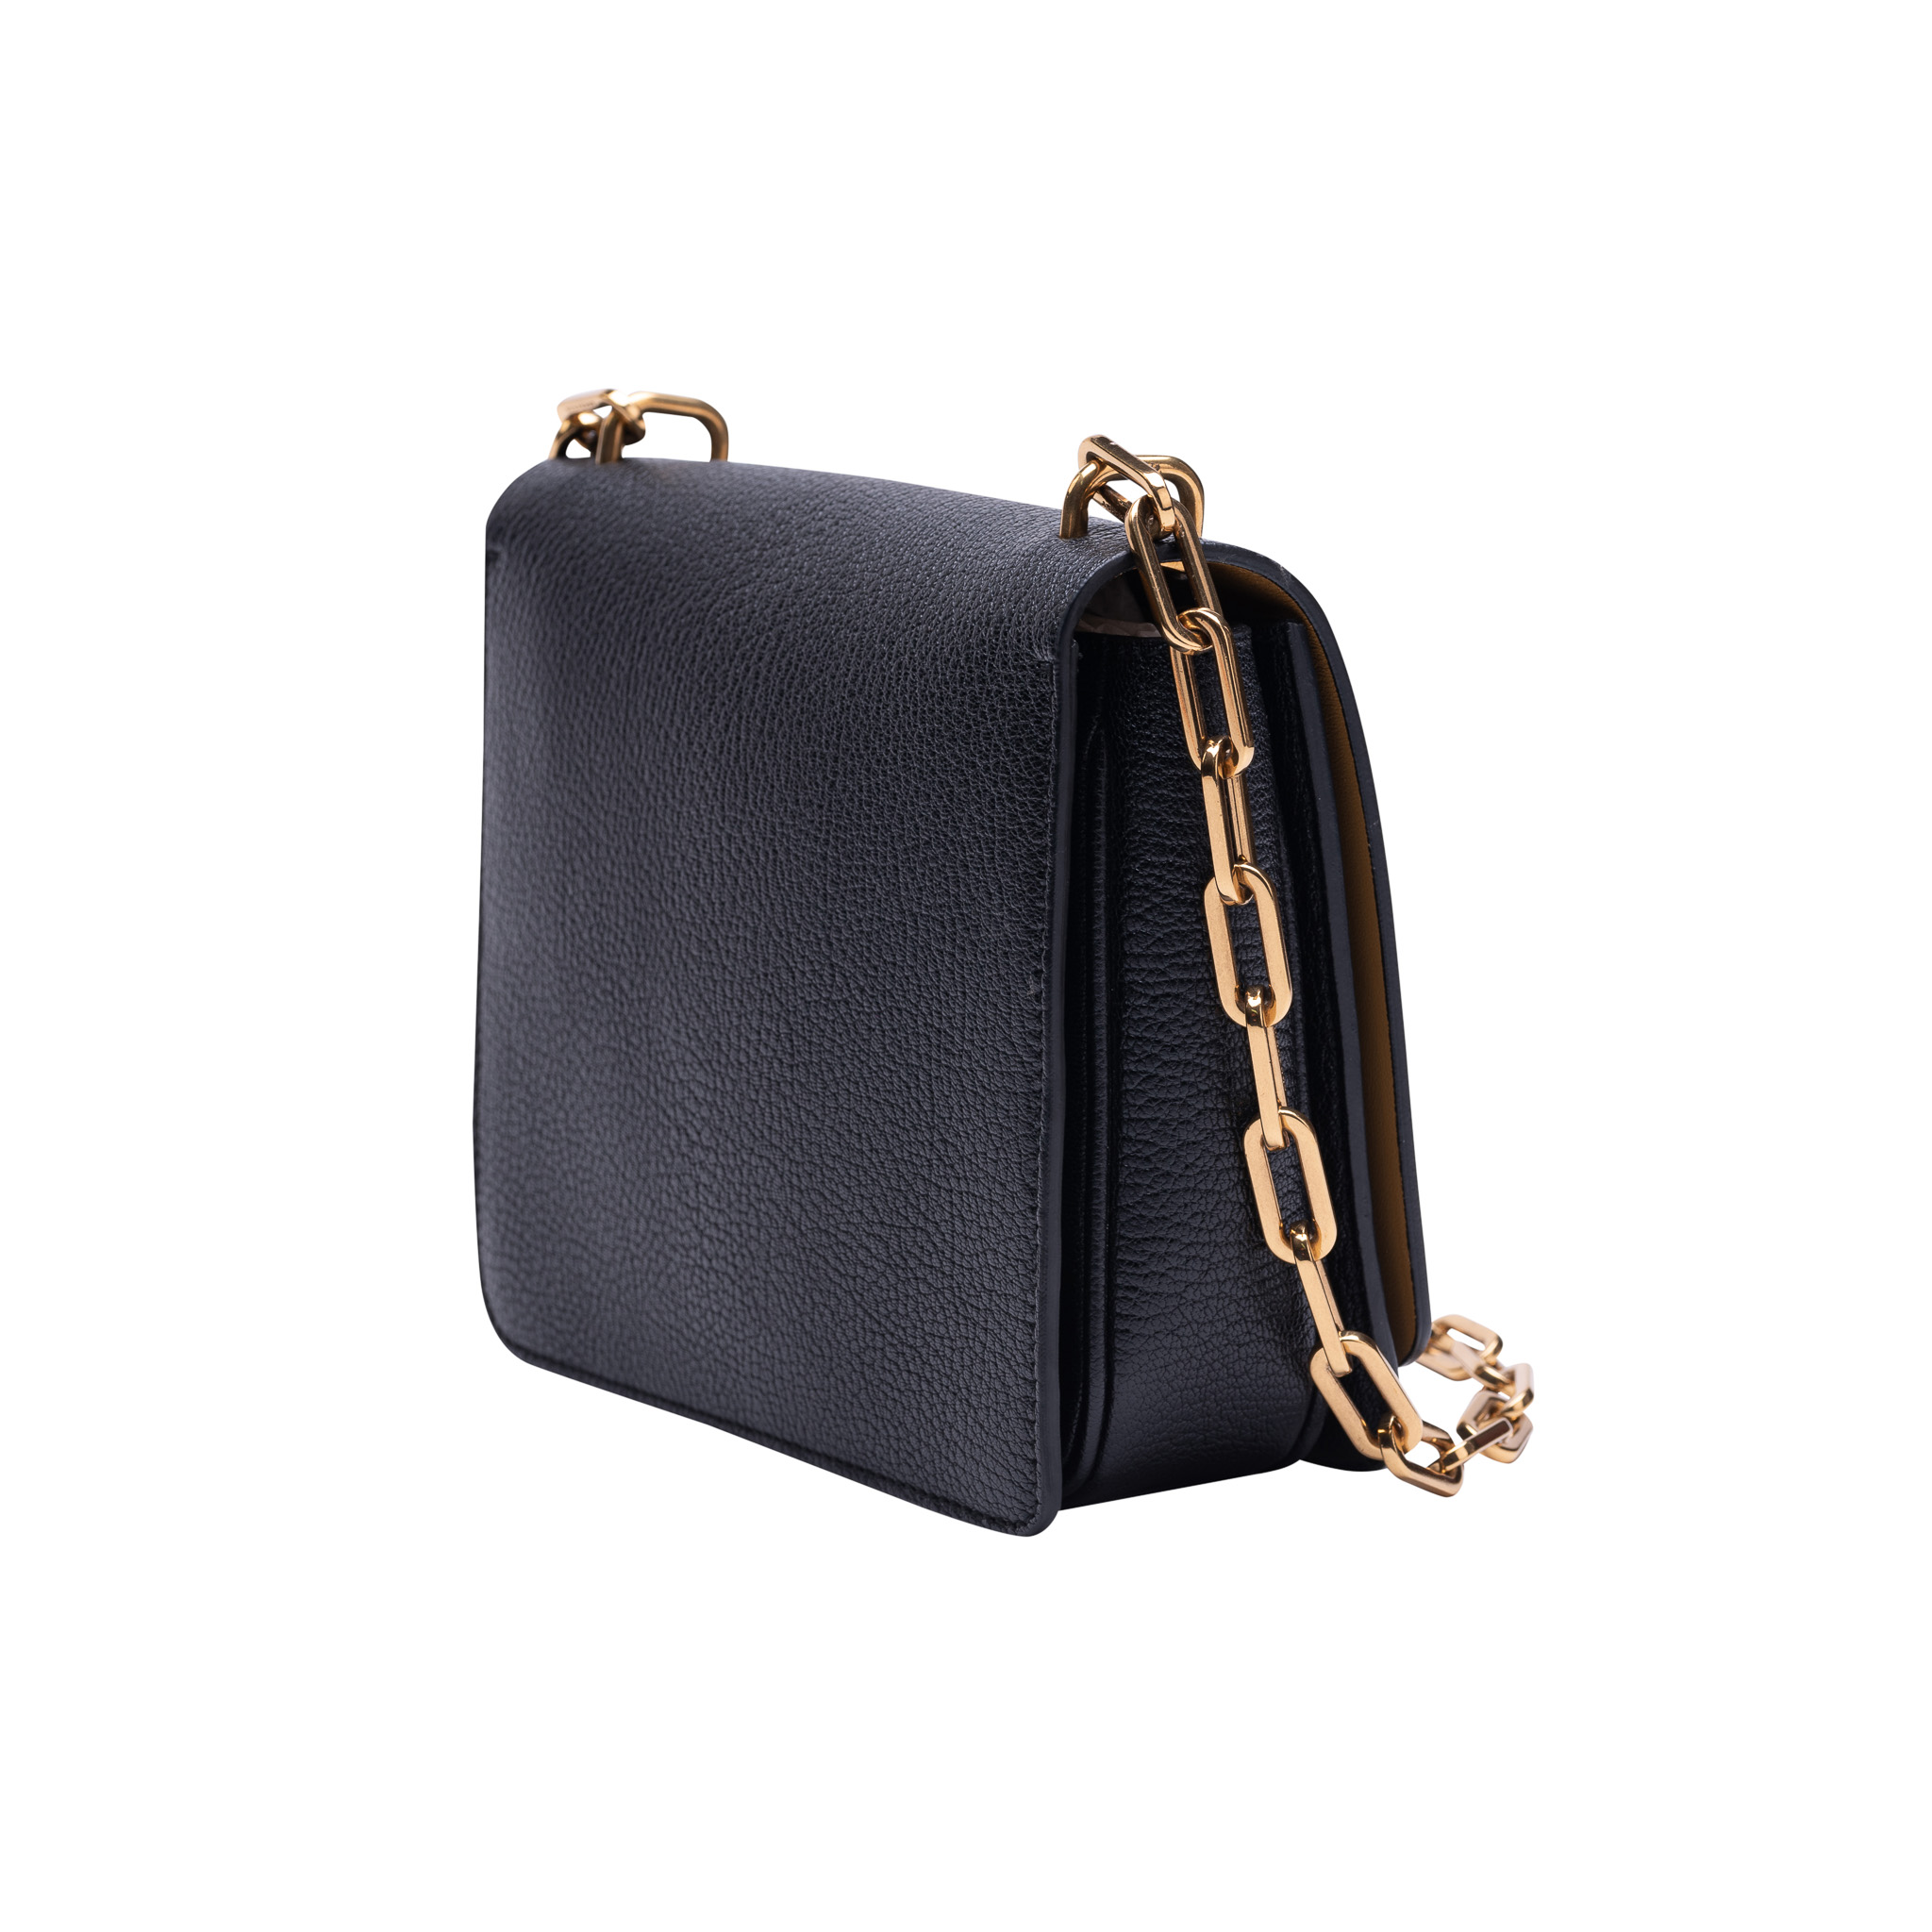 Burberry Mini D-Ring Leather Crossbody Bag on SALE